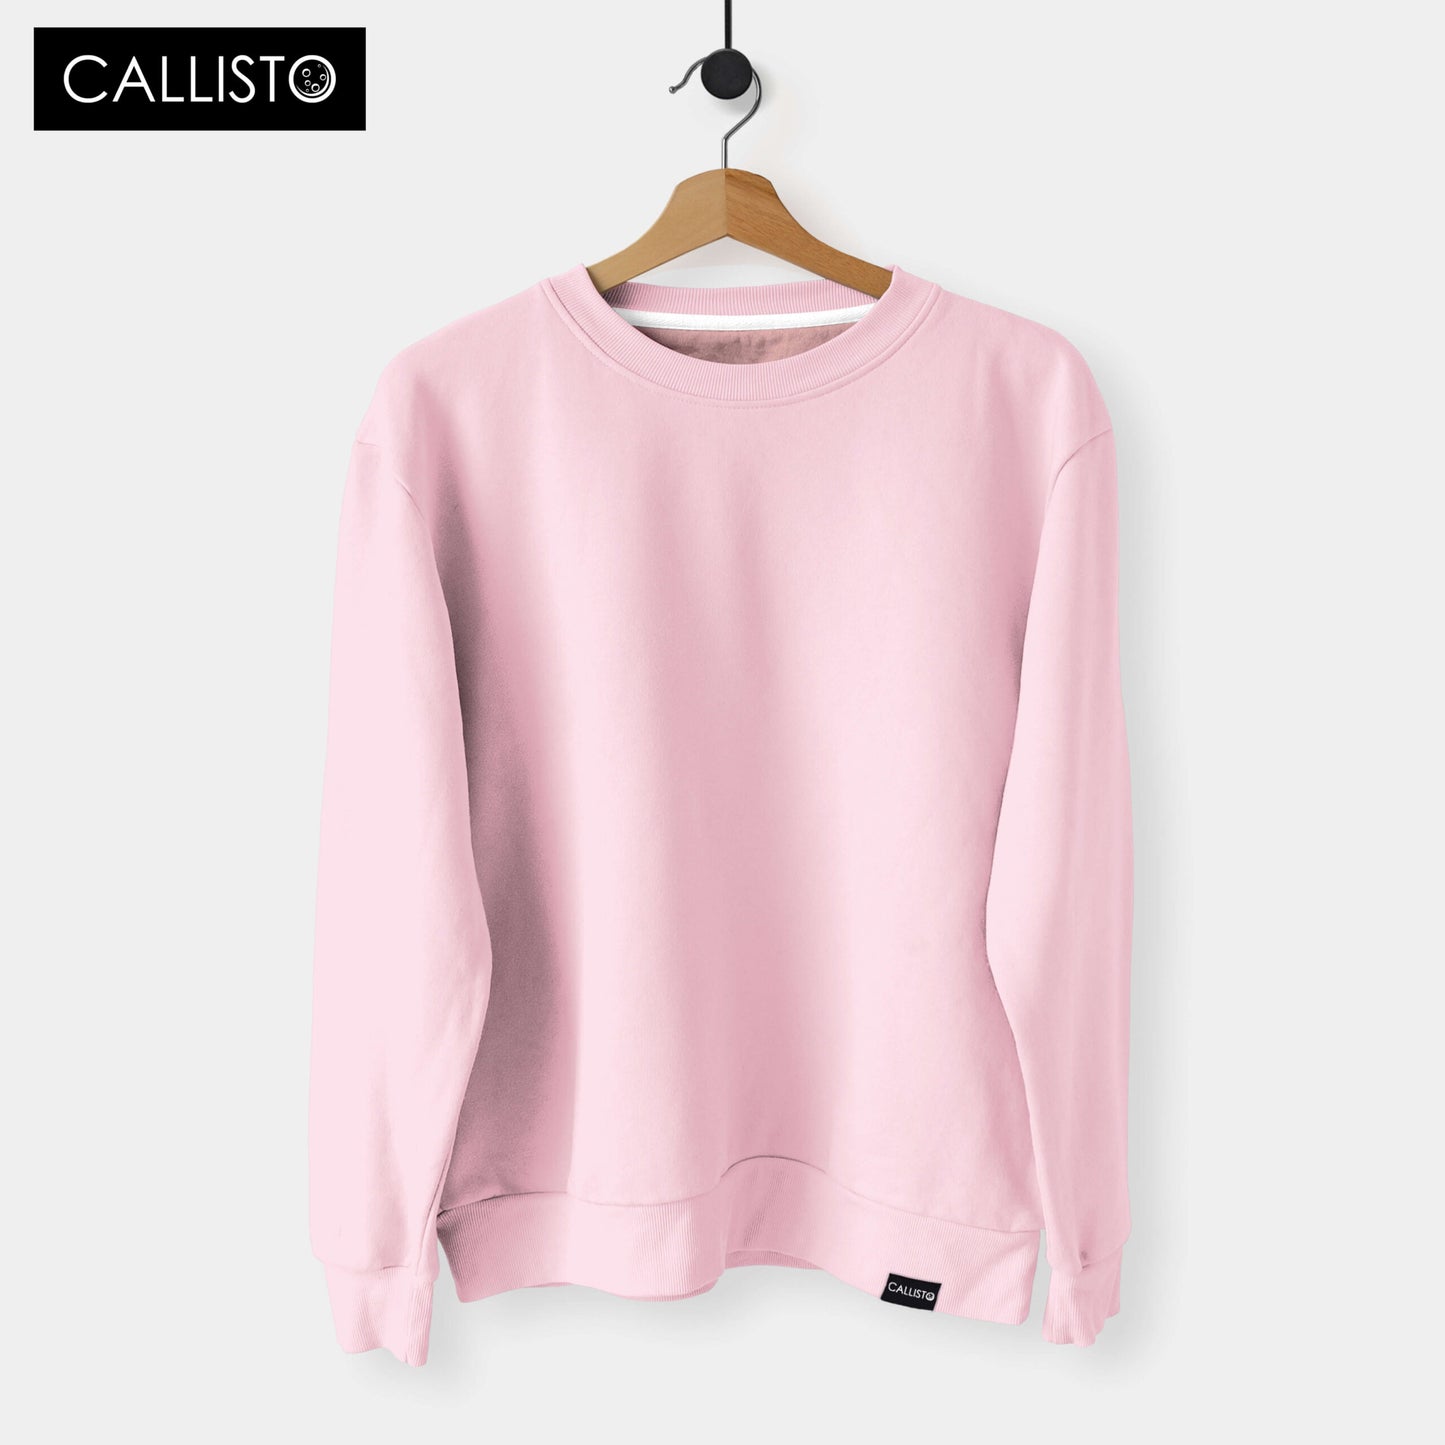 Relaxed Fit light tea pink Sweatshirt